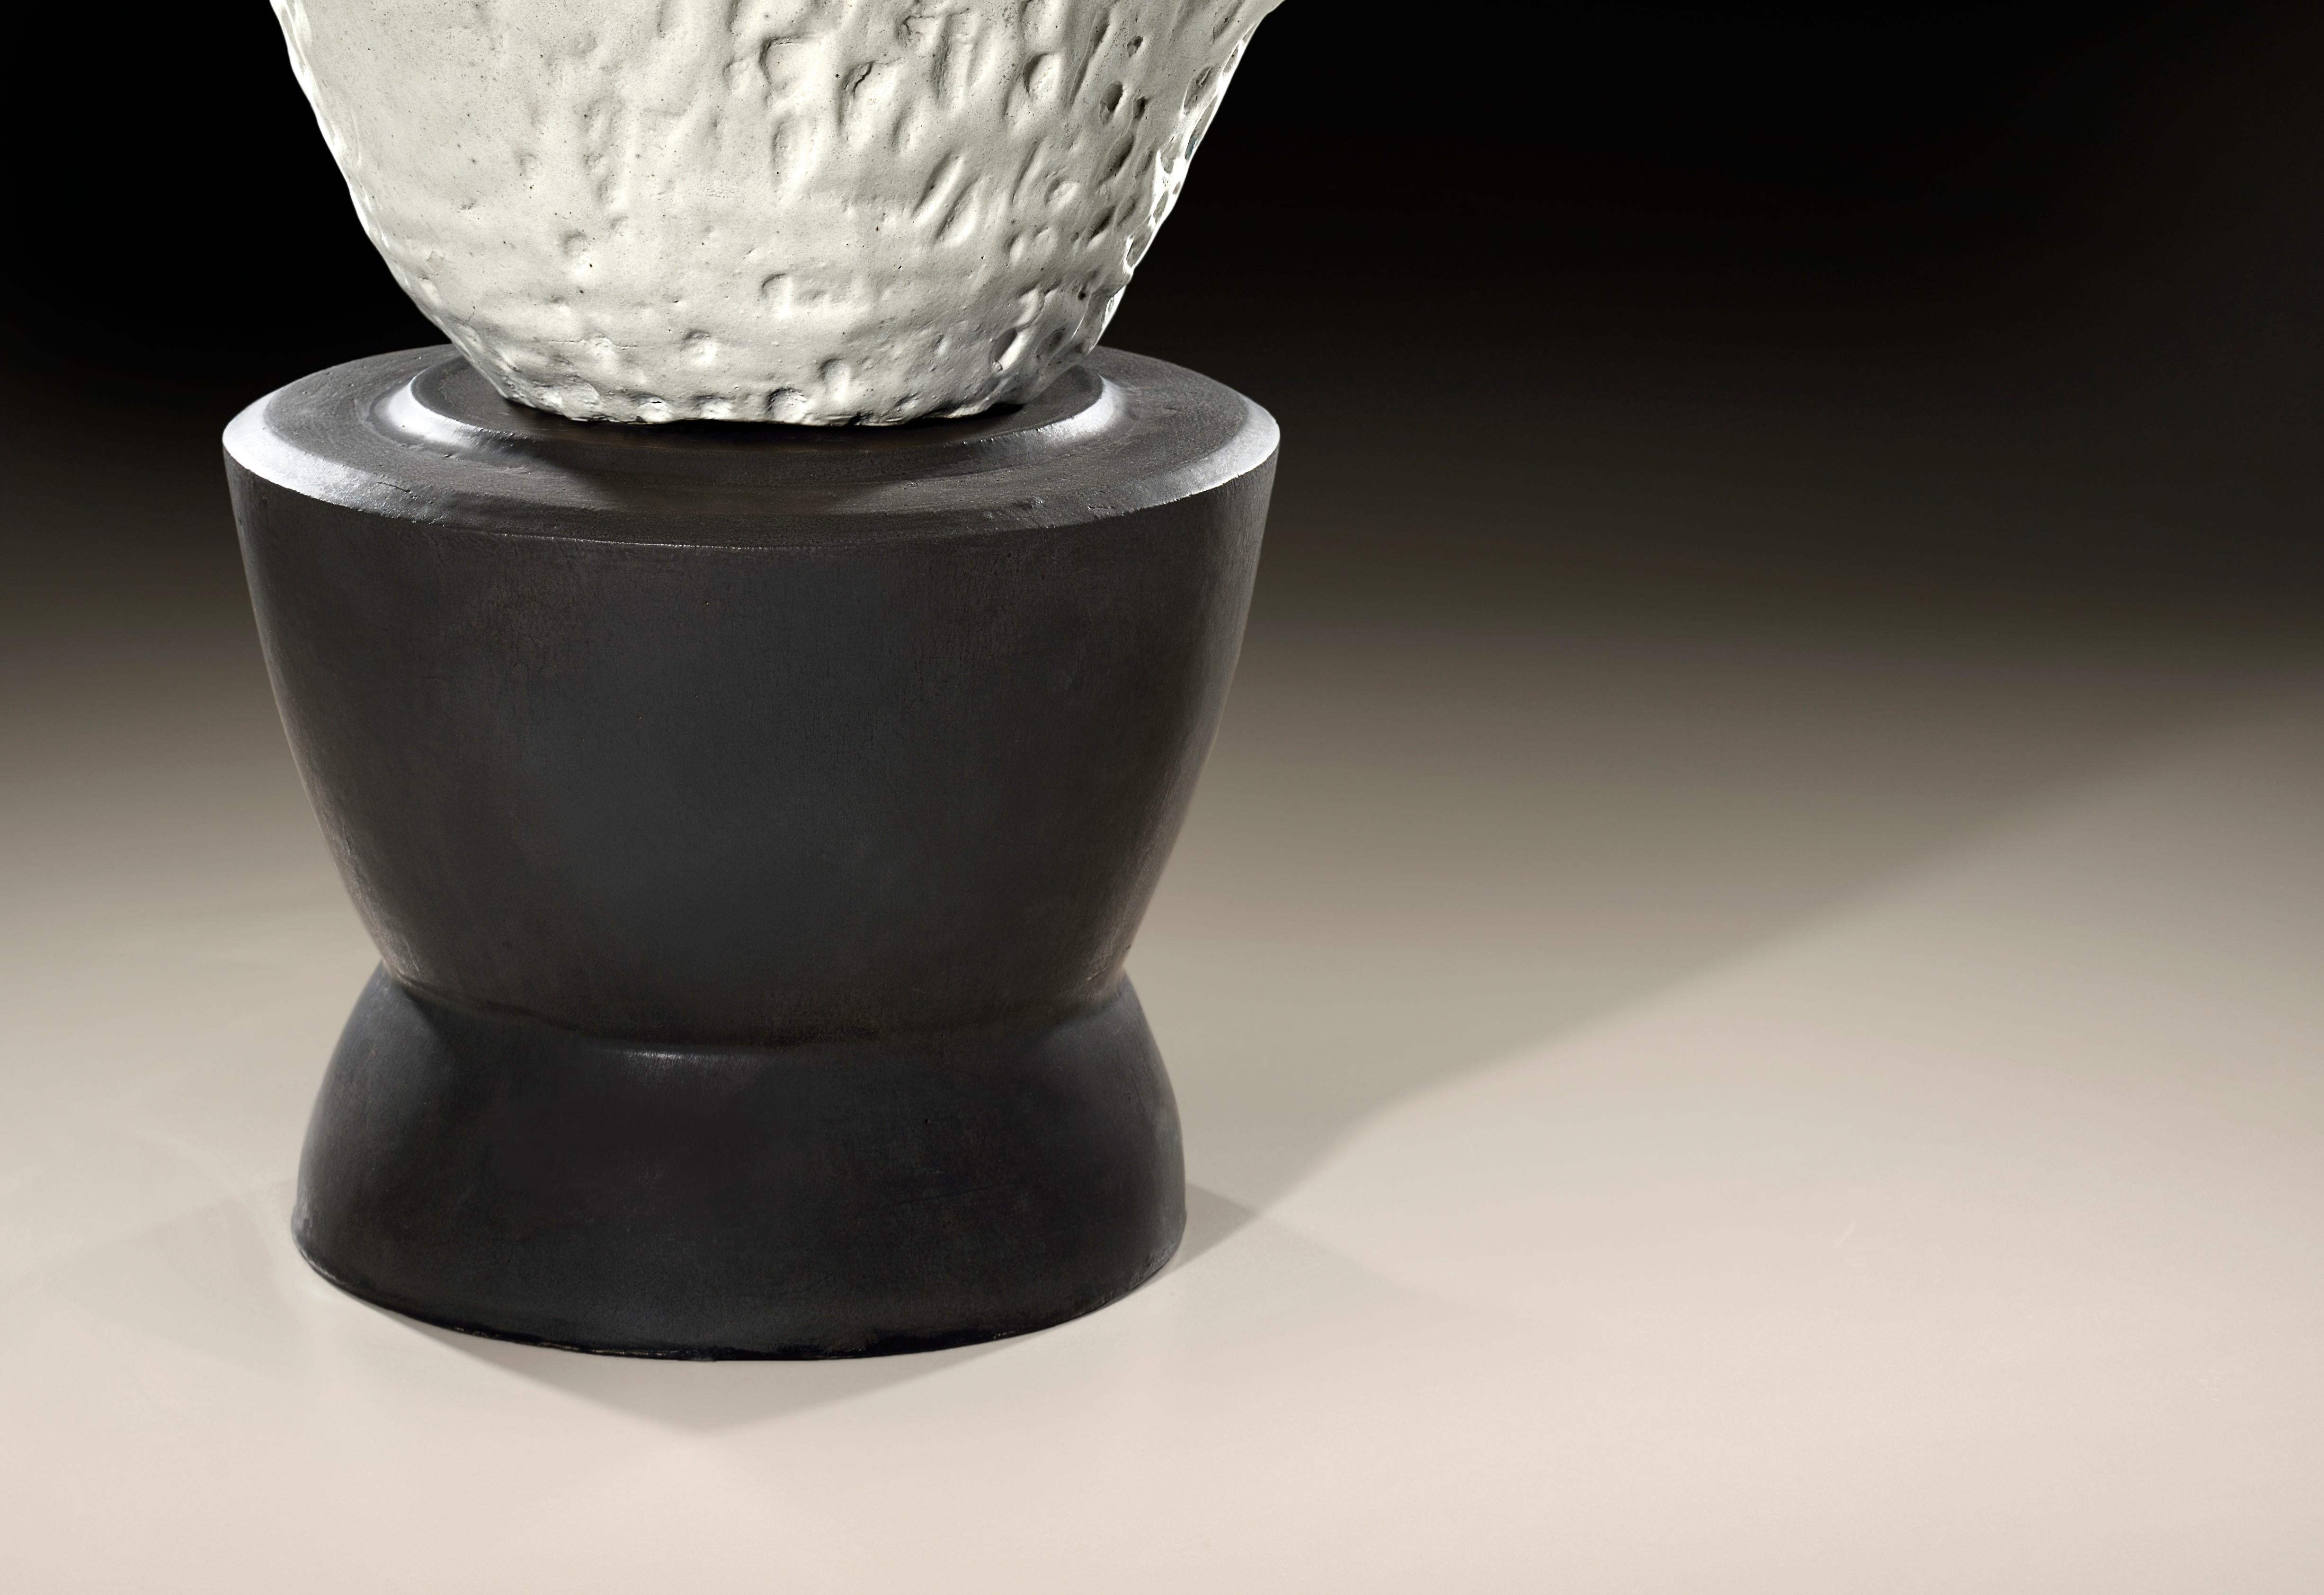 Contemporary Richard Hirsch Ceramic Mortar and Glass Pestle Sculpture #2, 2020 For Sale